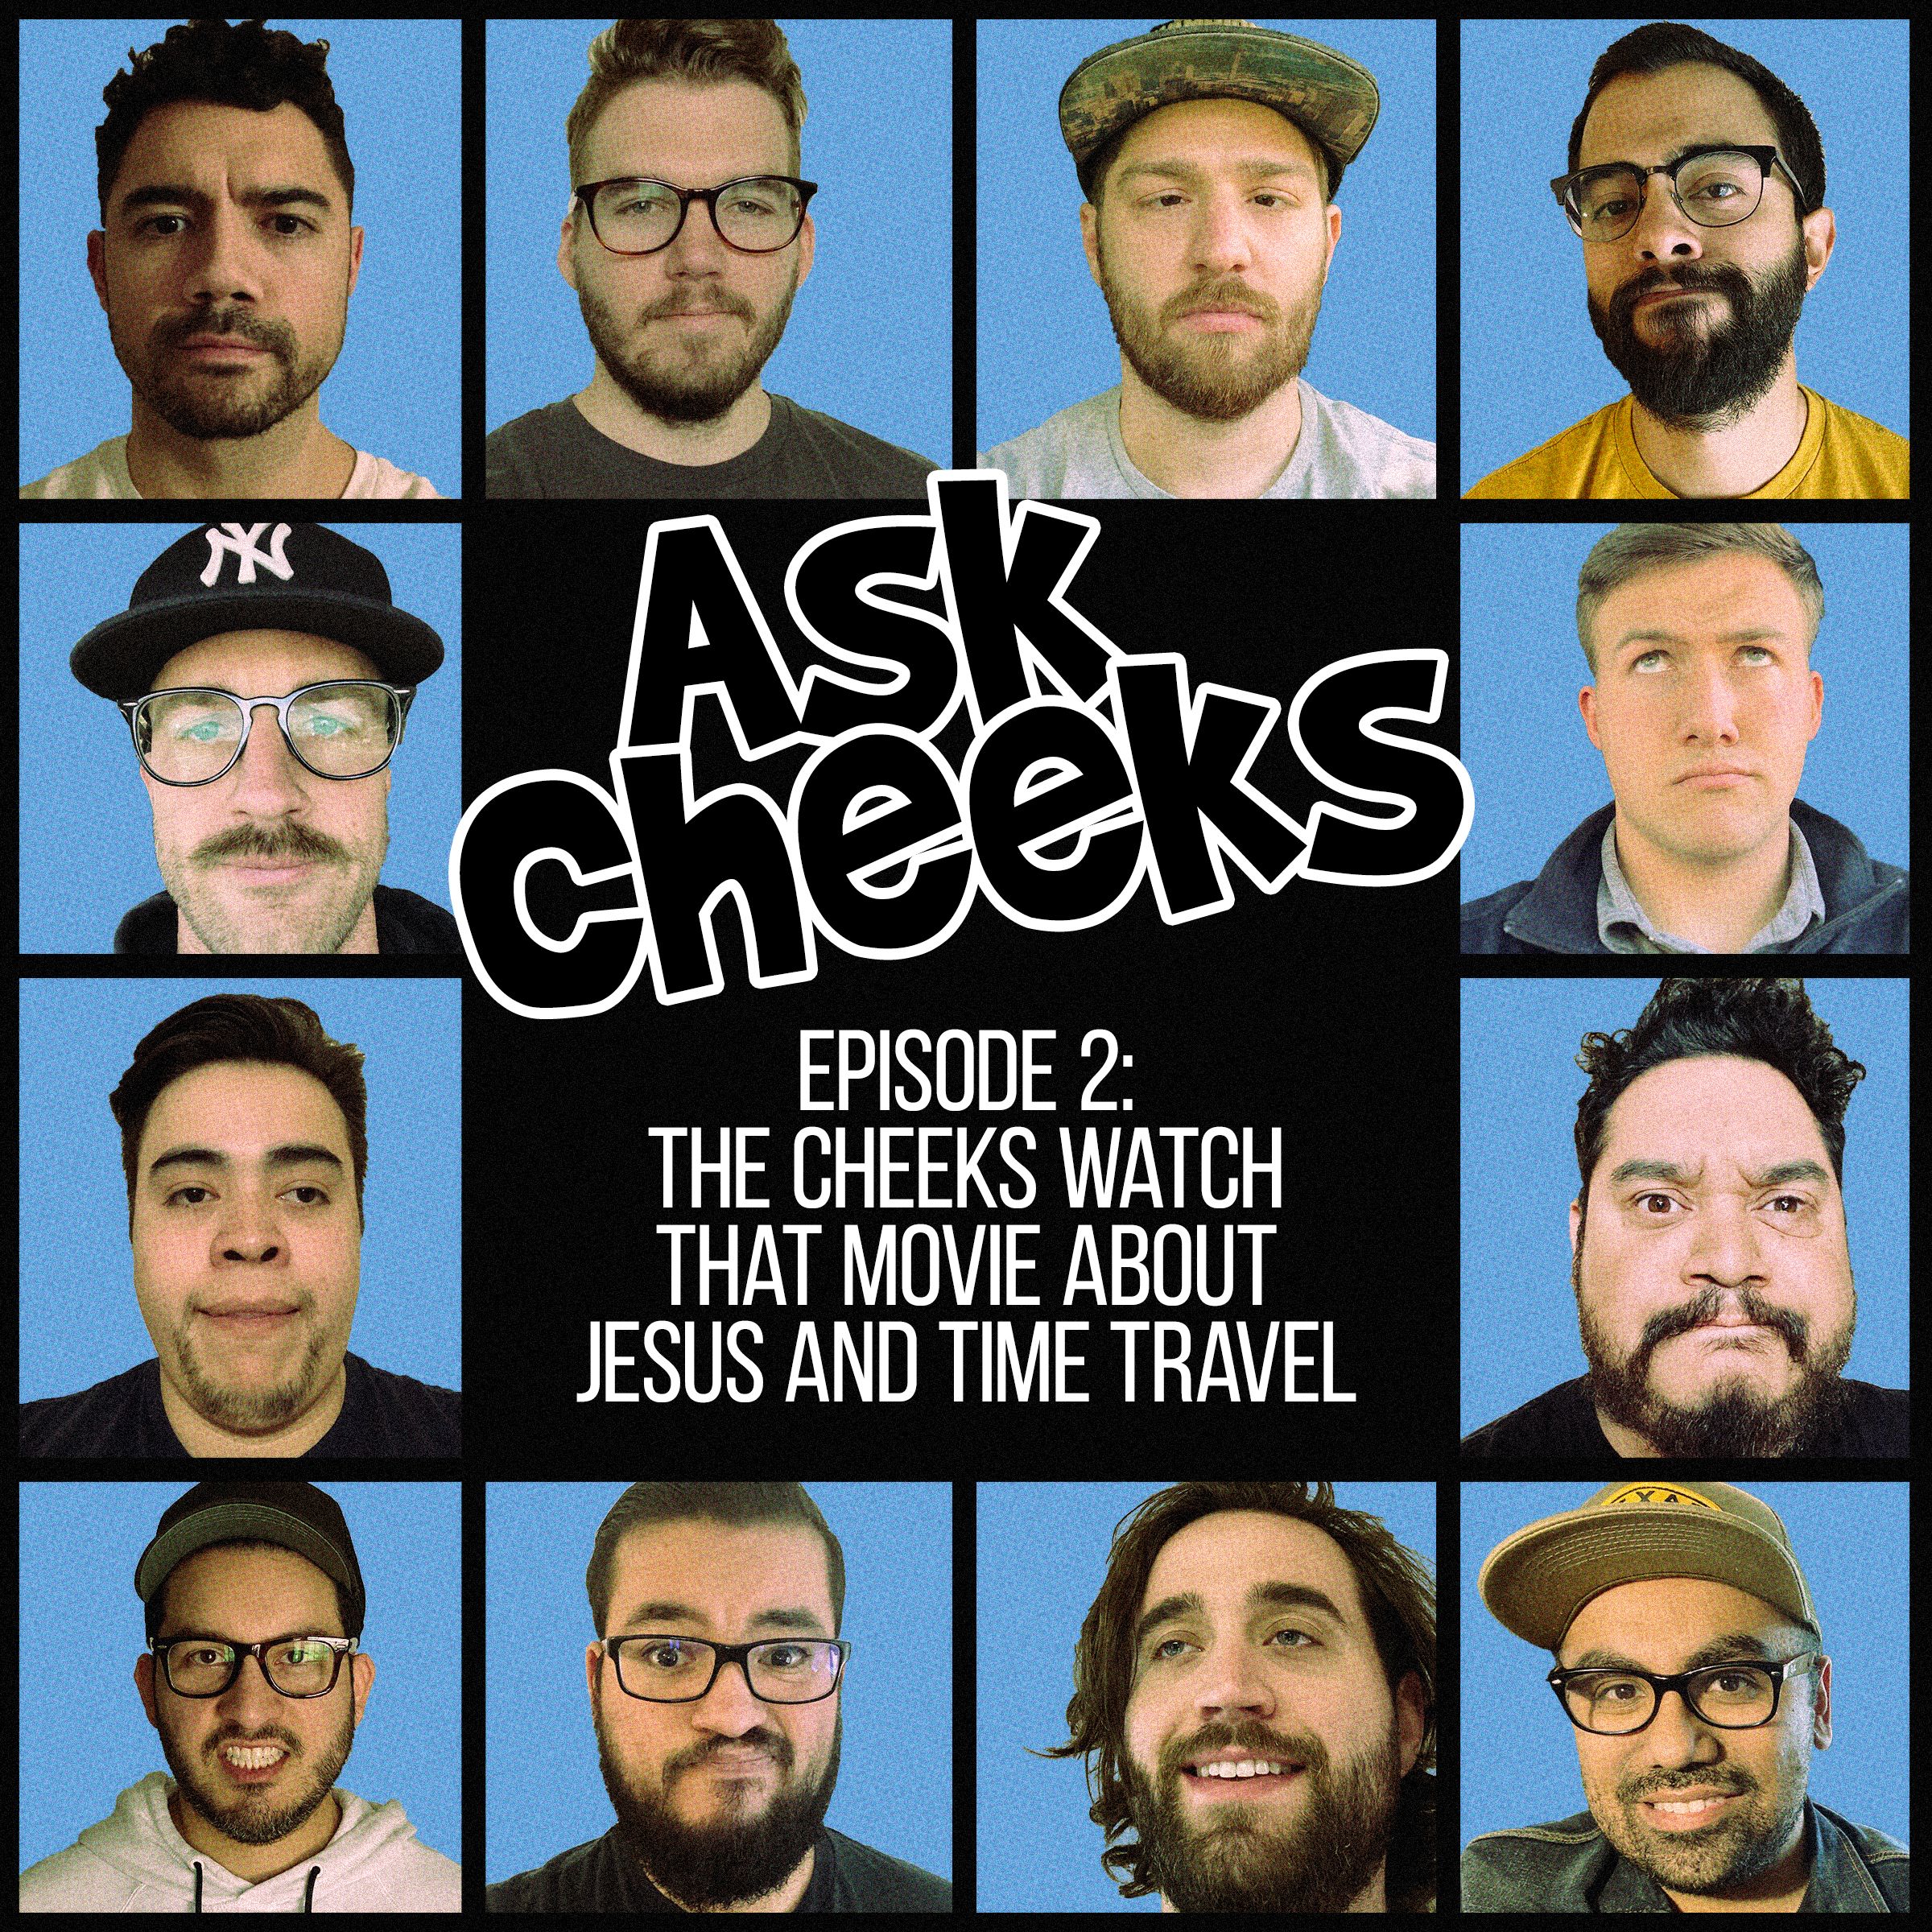 Ask Cheeks